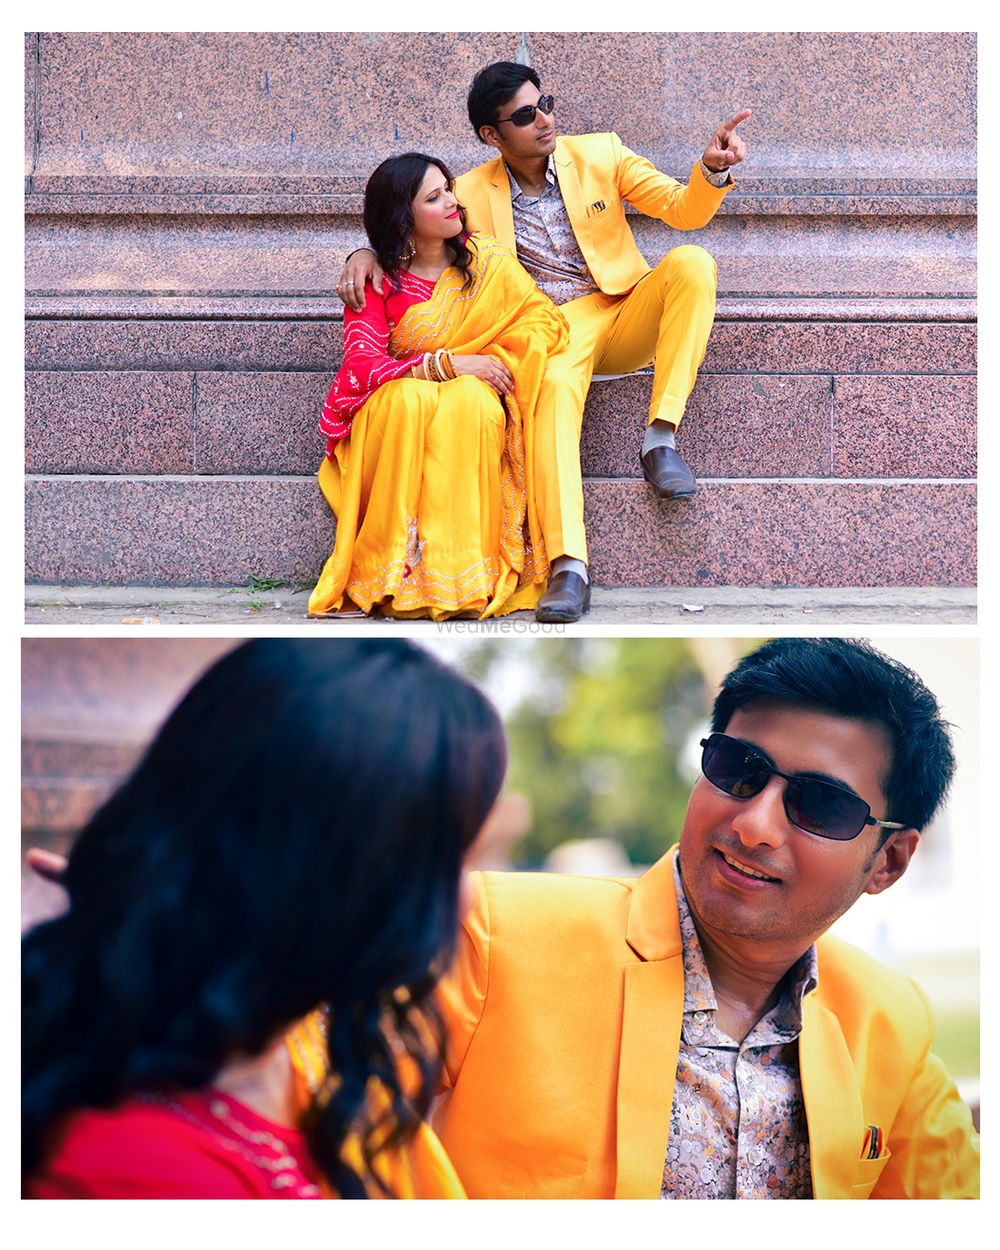 Photo From Pre-Wedding Suraj x Sweta - By Atlantis Photography